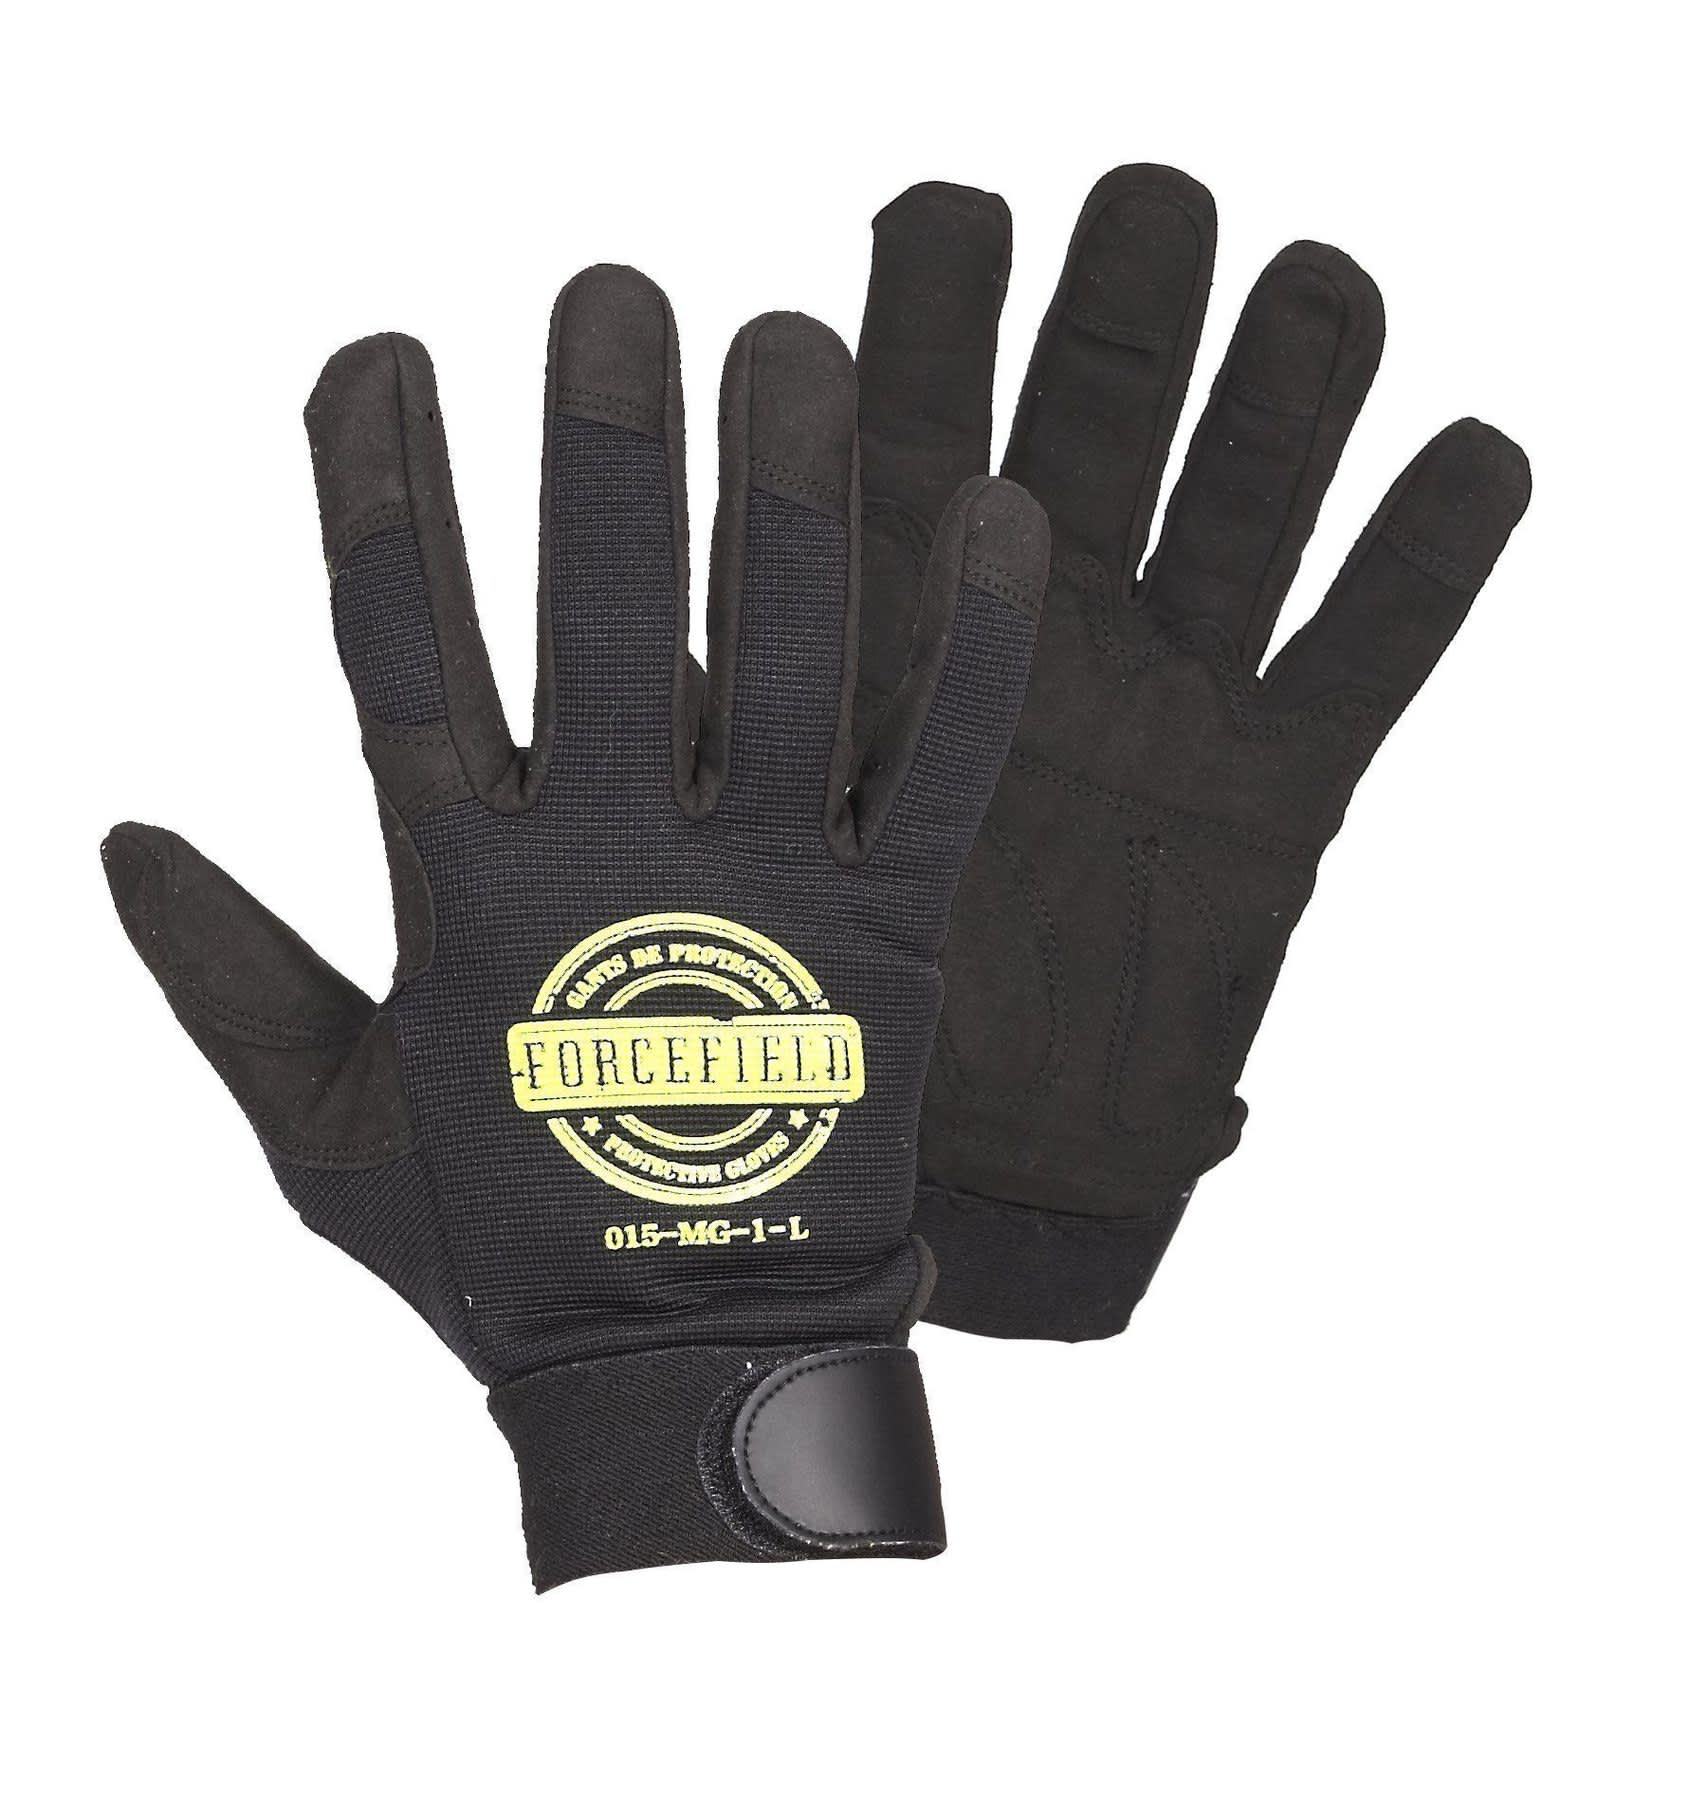 Mechanics glove w/padding 015-MG-1 – L